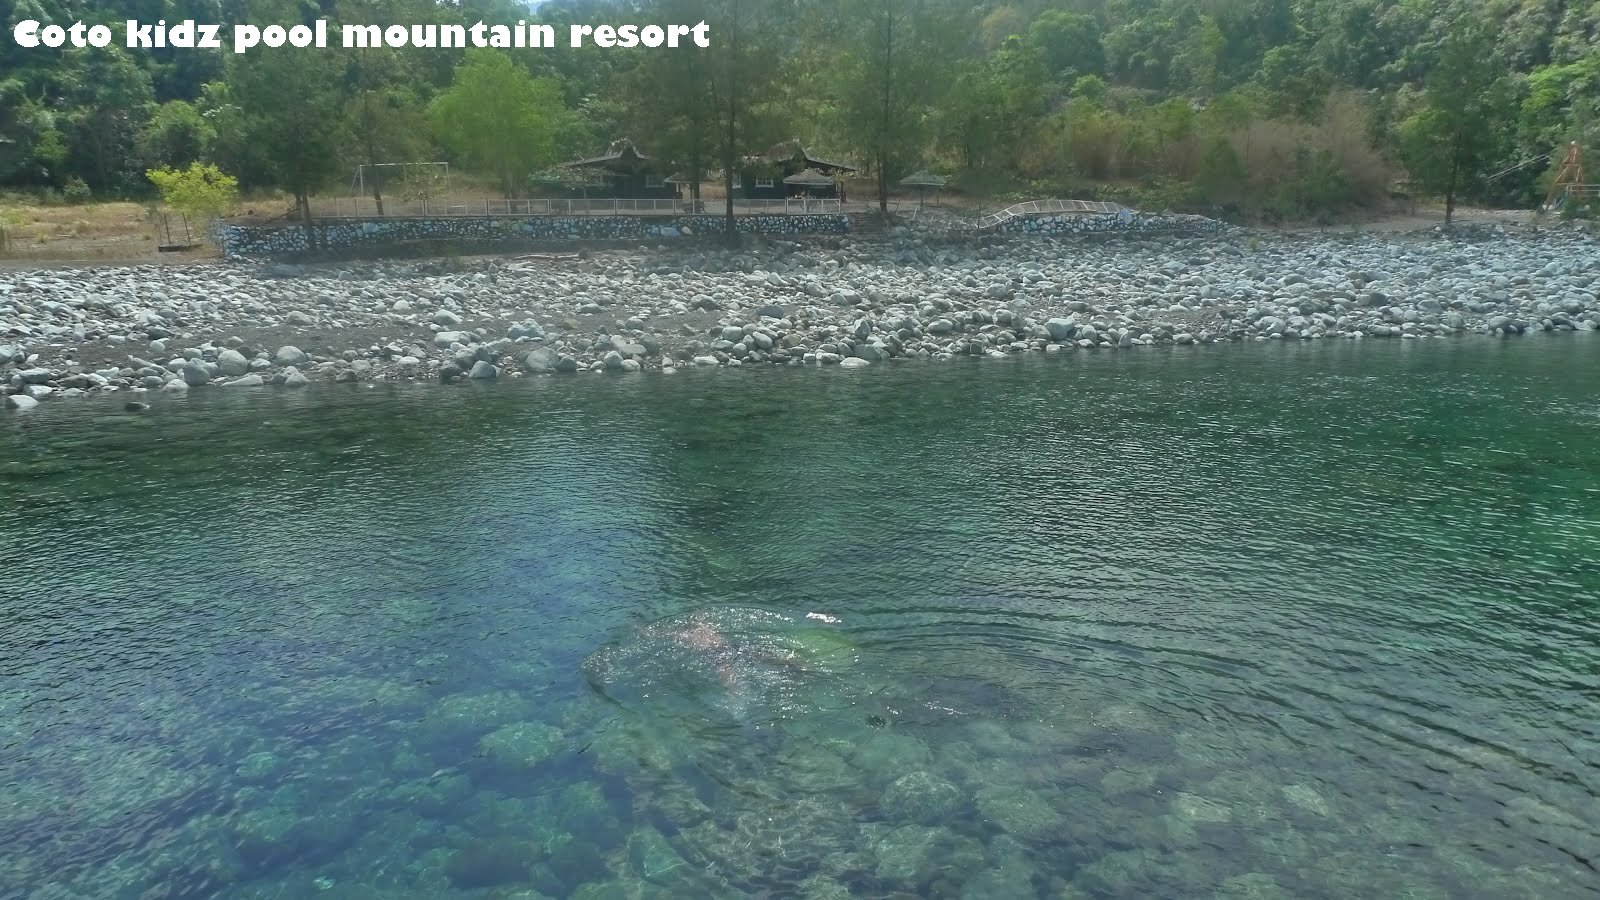 Coto kidz pool mountain resort in Masinloc, Zambales tourist spot